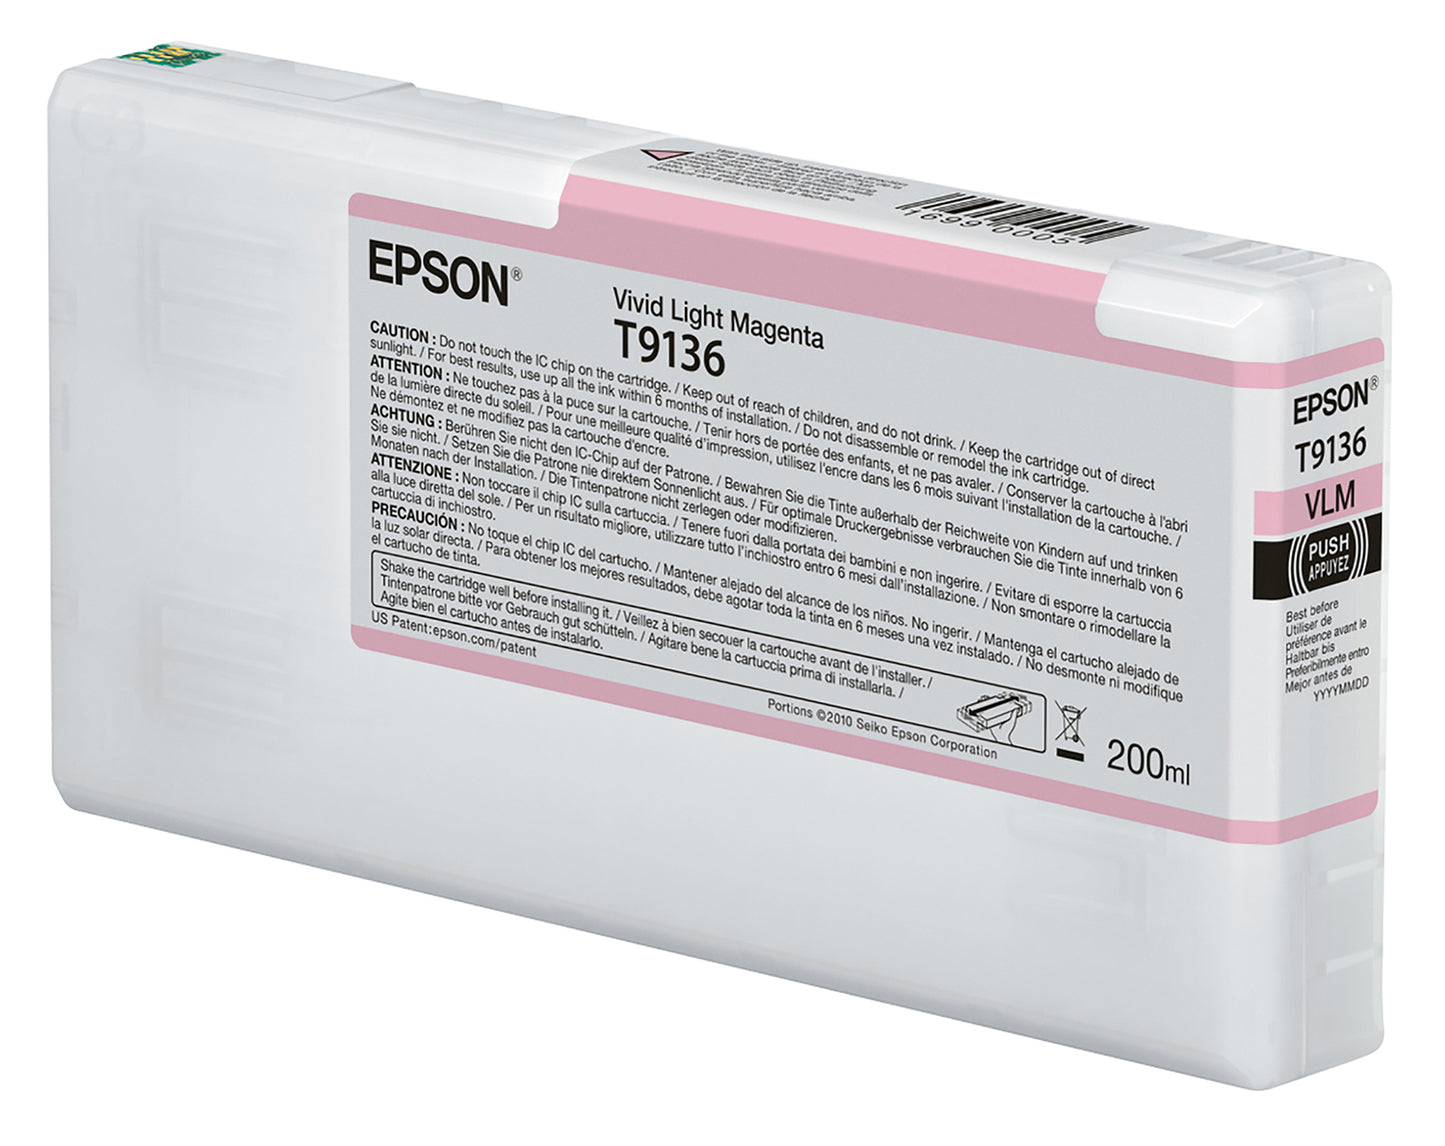 Epson UltraChrome HDX Vivid Light Magenta Ink 200ml (T913600)